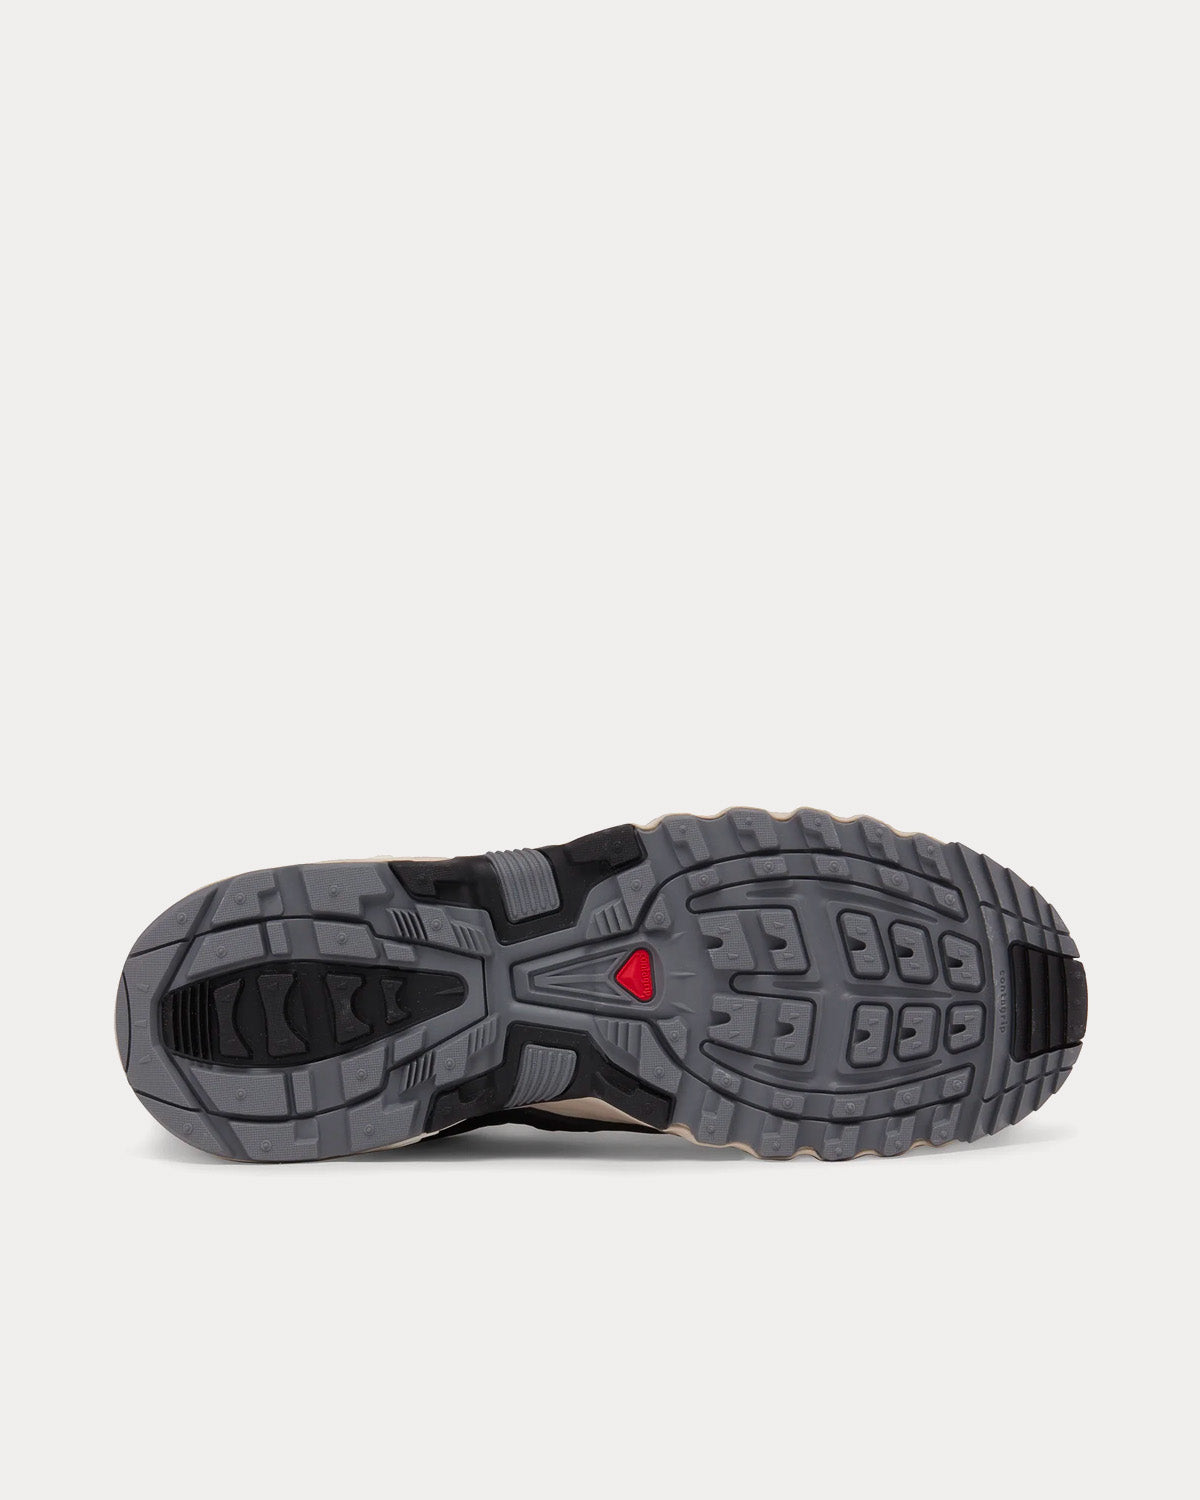 Salomon x DSM - ACS Pro Off-White / Black Low Top Sneakers